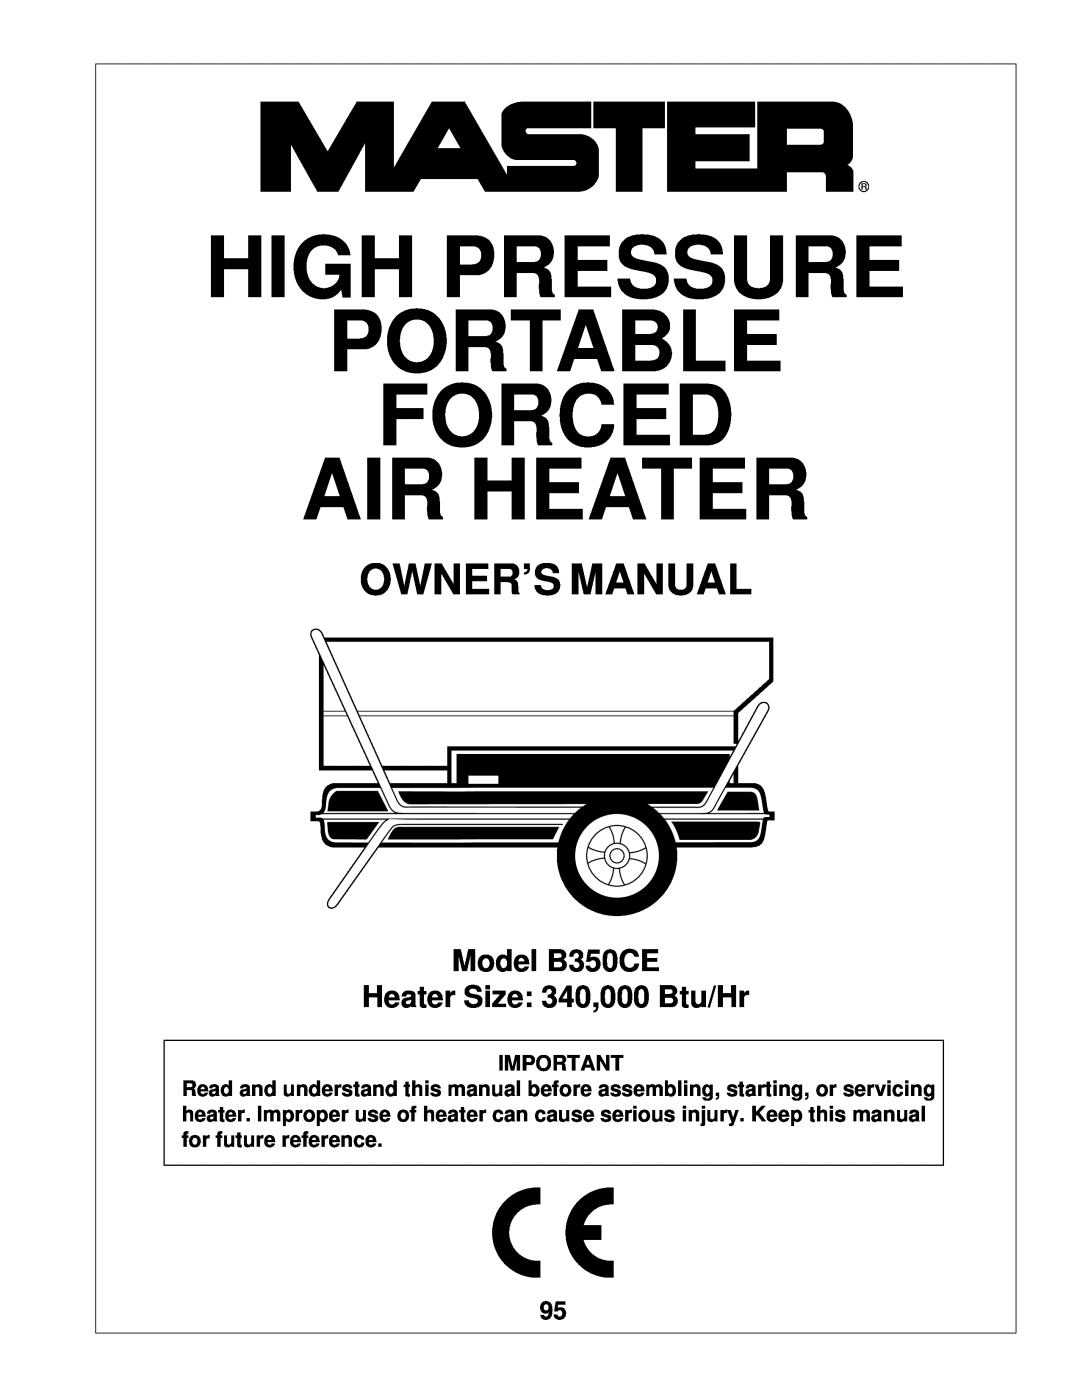 Desa owner manual Model B350CE Heater Size 340,000 Btu/Hr, High Pressure Portable Forced Air Heater, Side Pfa/Pv 